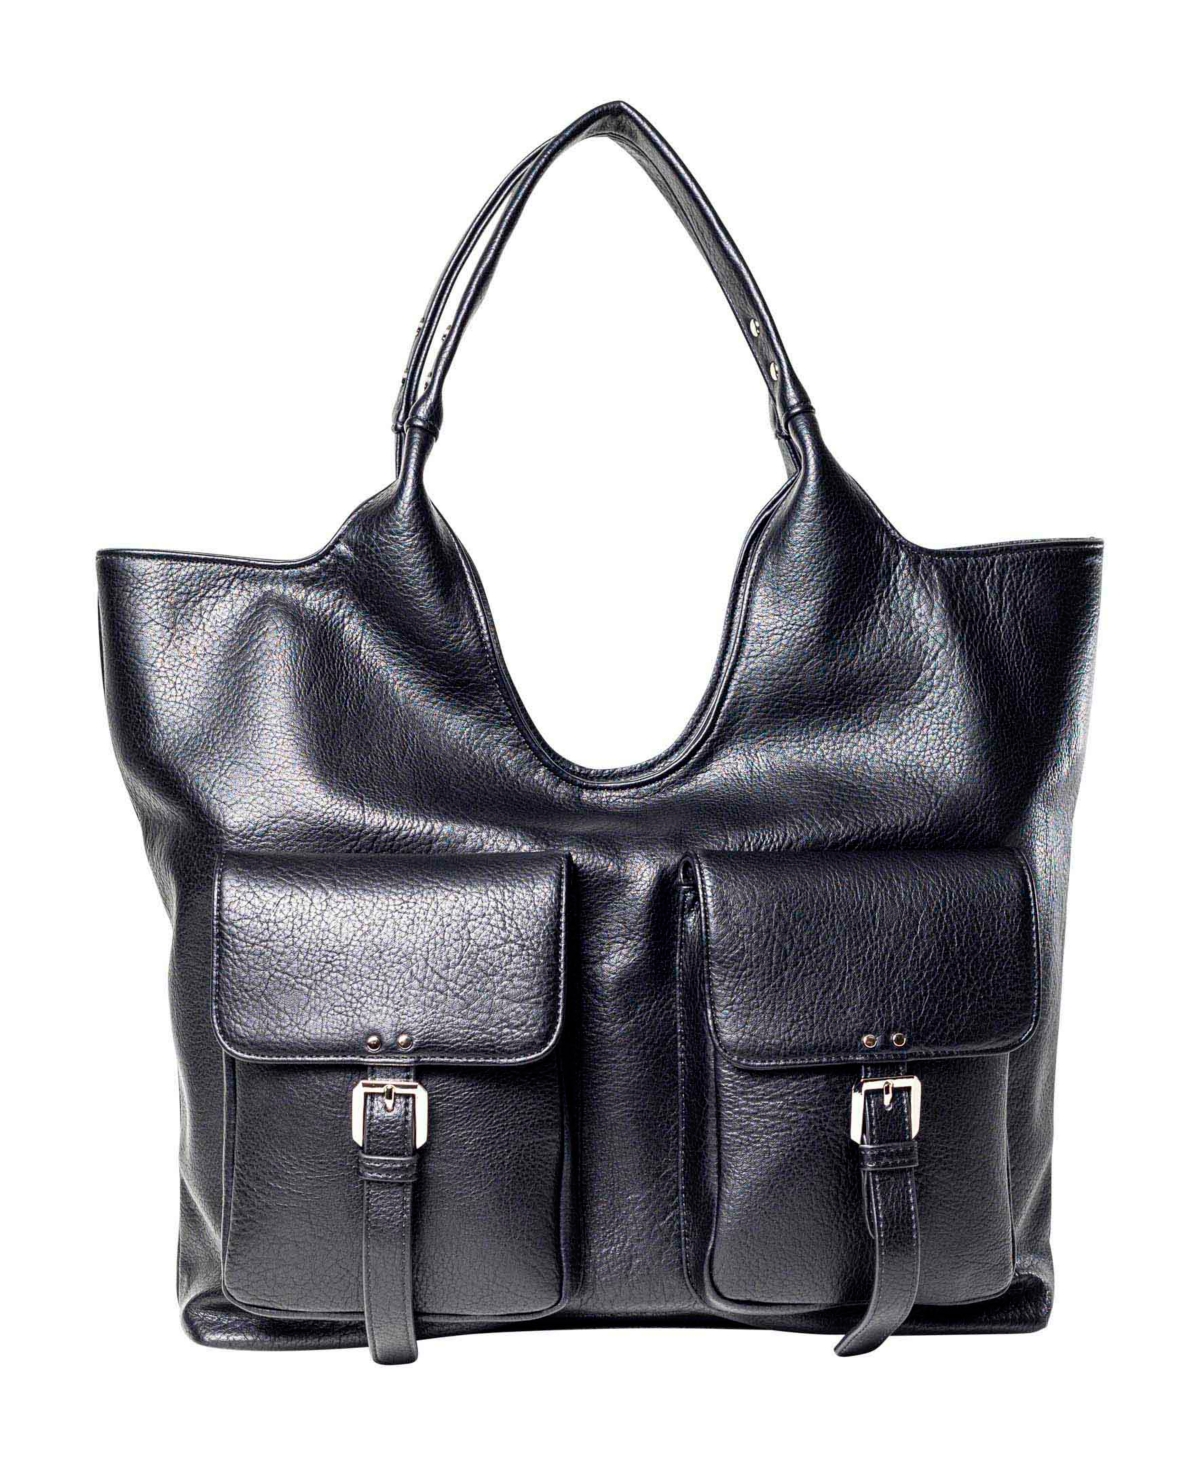 Urban Originals Royale Faux Leather Tote Bag In Black